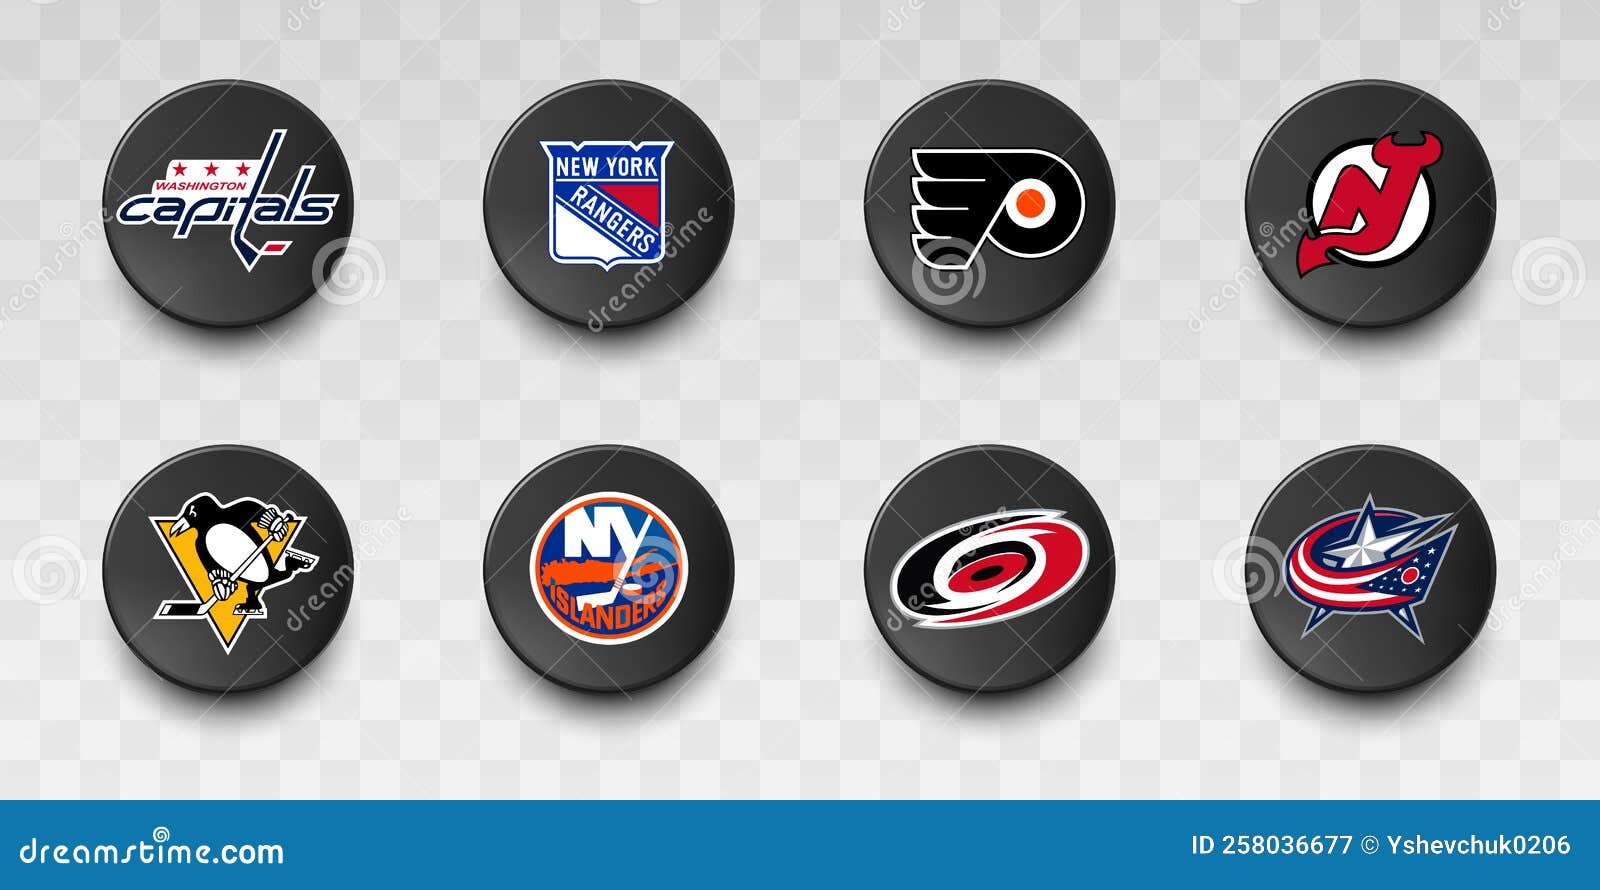 New York Rangers Jersey Logo - National Hockey League (NHL